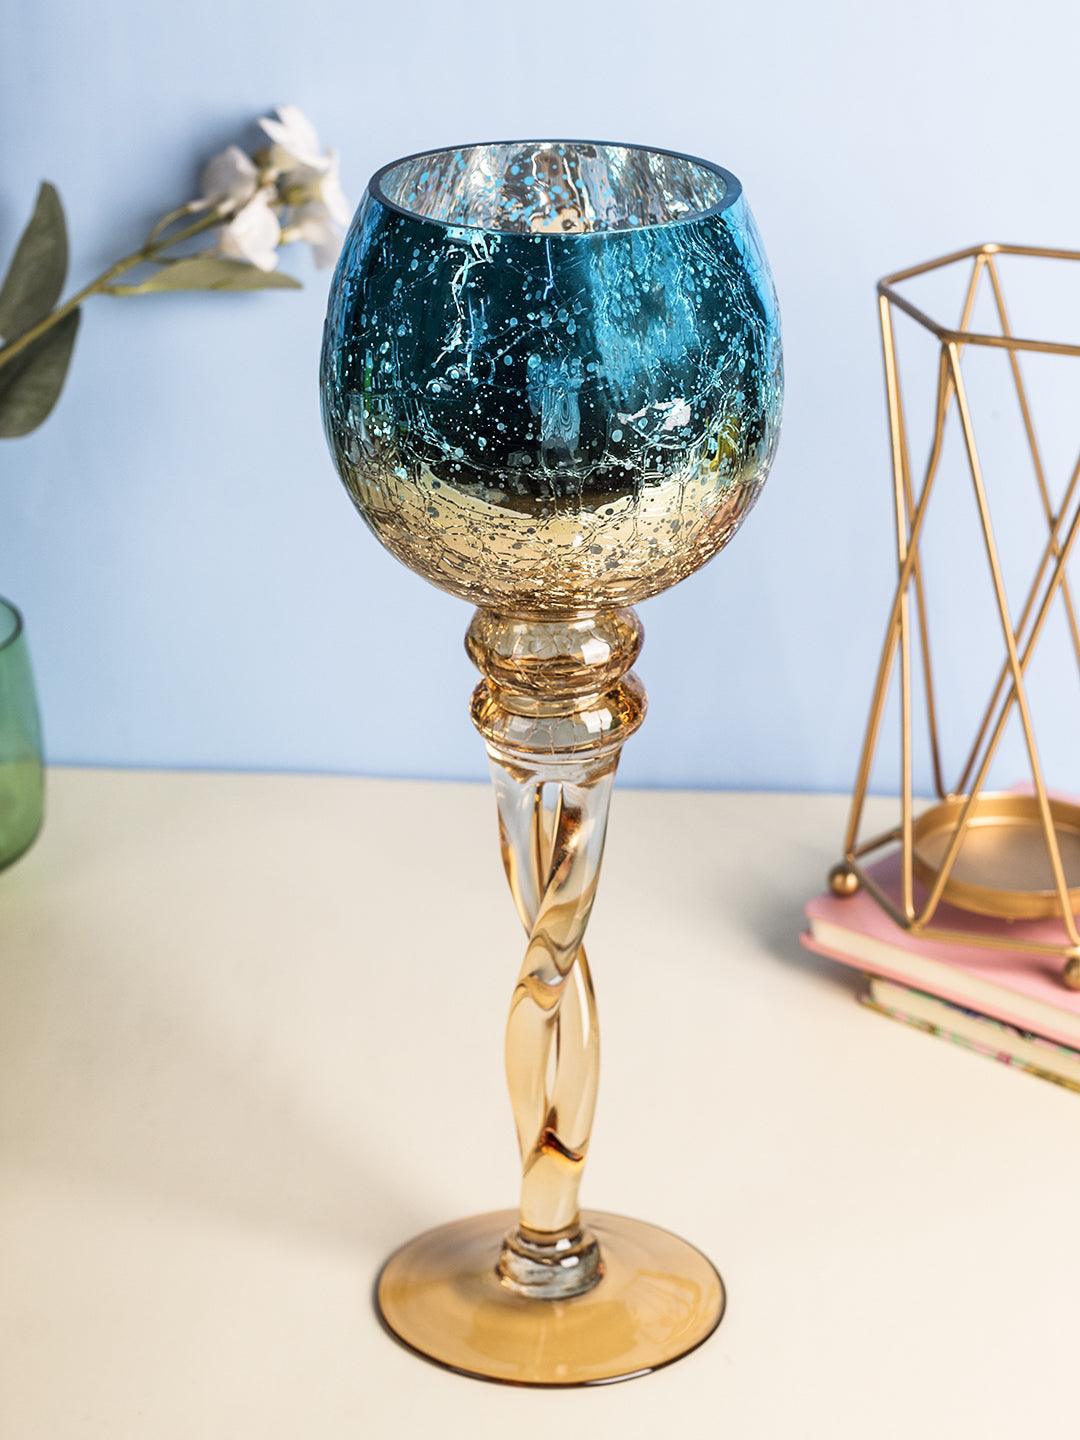 Decorative Skyblue Tined Glass Candlestick Holder - MARKET 99